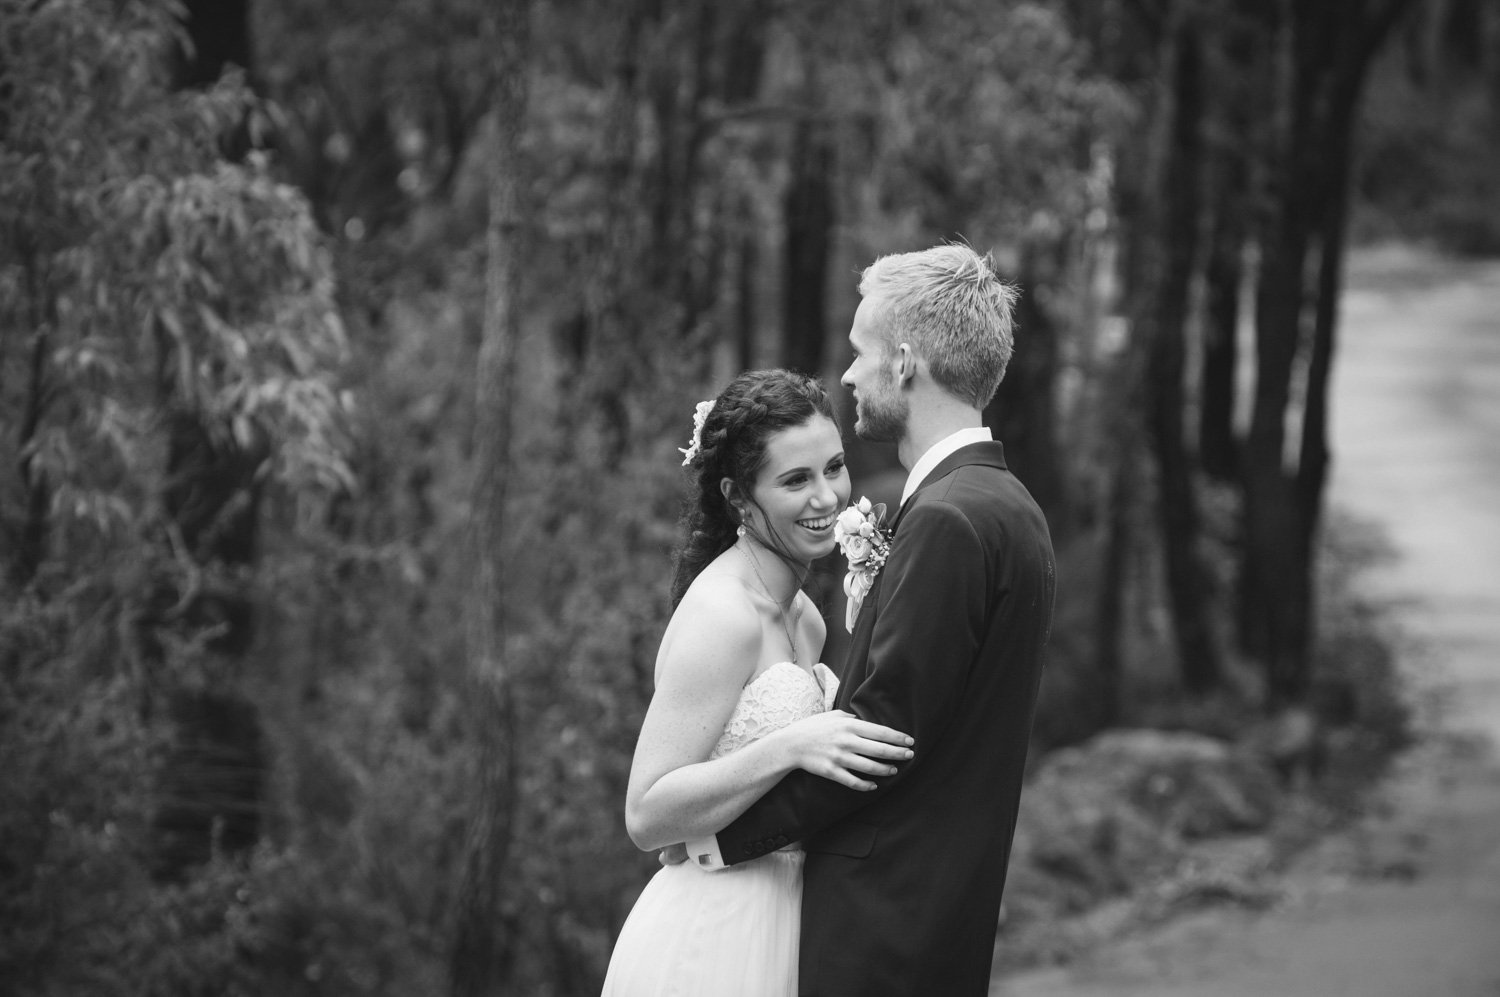 Darlington-Estate-Perth-Wedding-Photographer-Angie-Roe-Photography-60.jpg